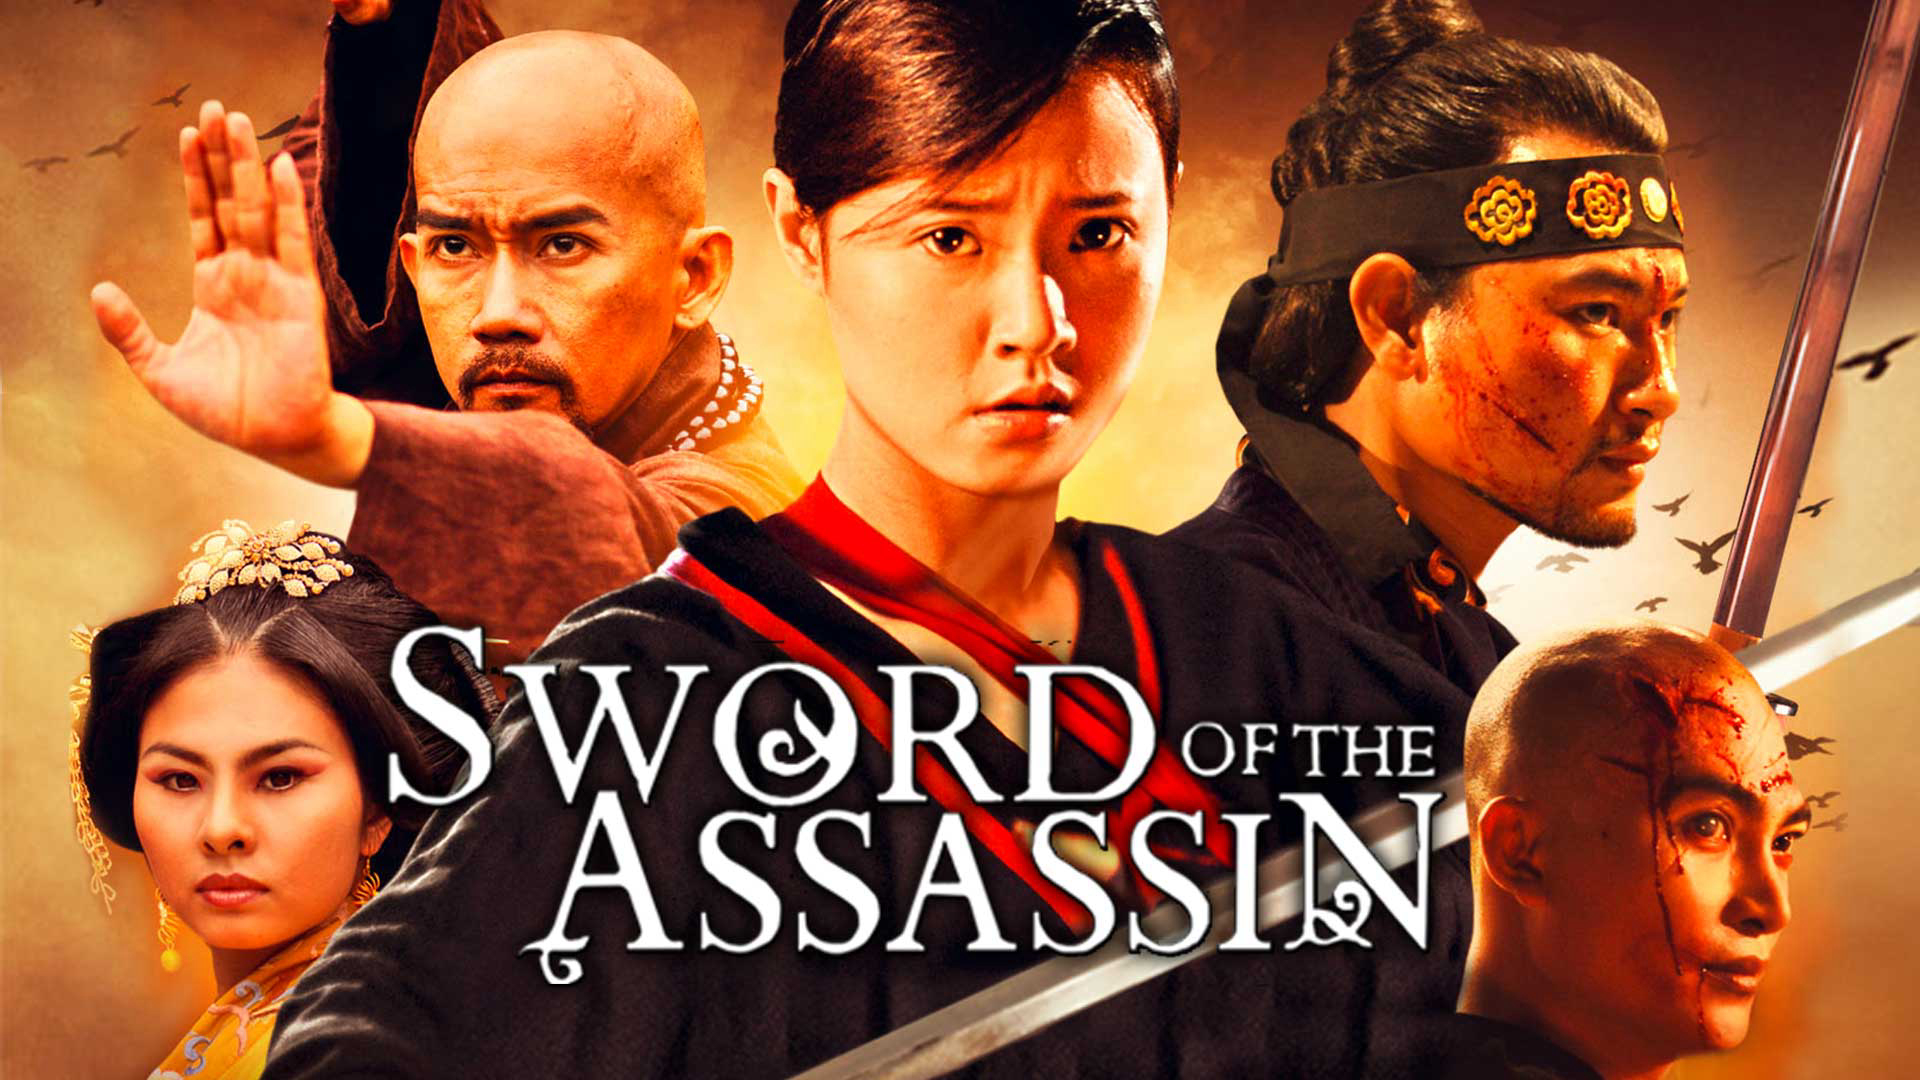 Sword of the Assassin / Sword of the Assassin (2012)